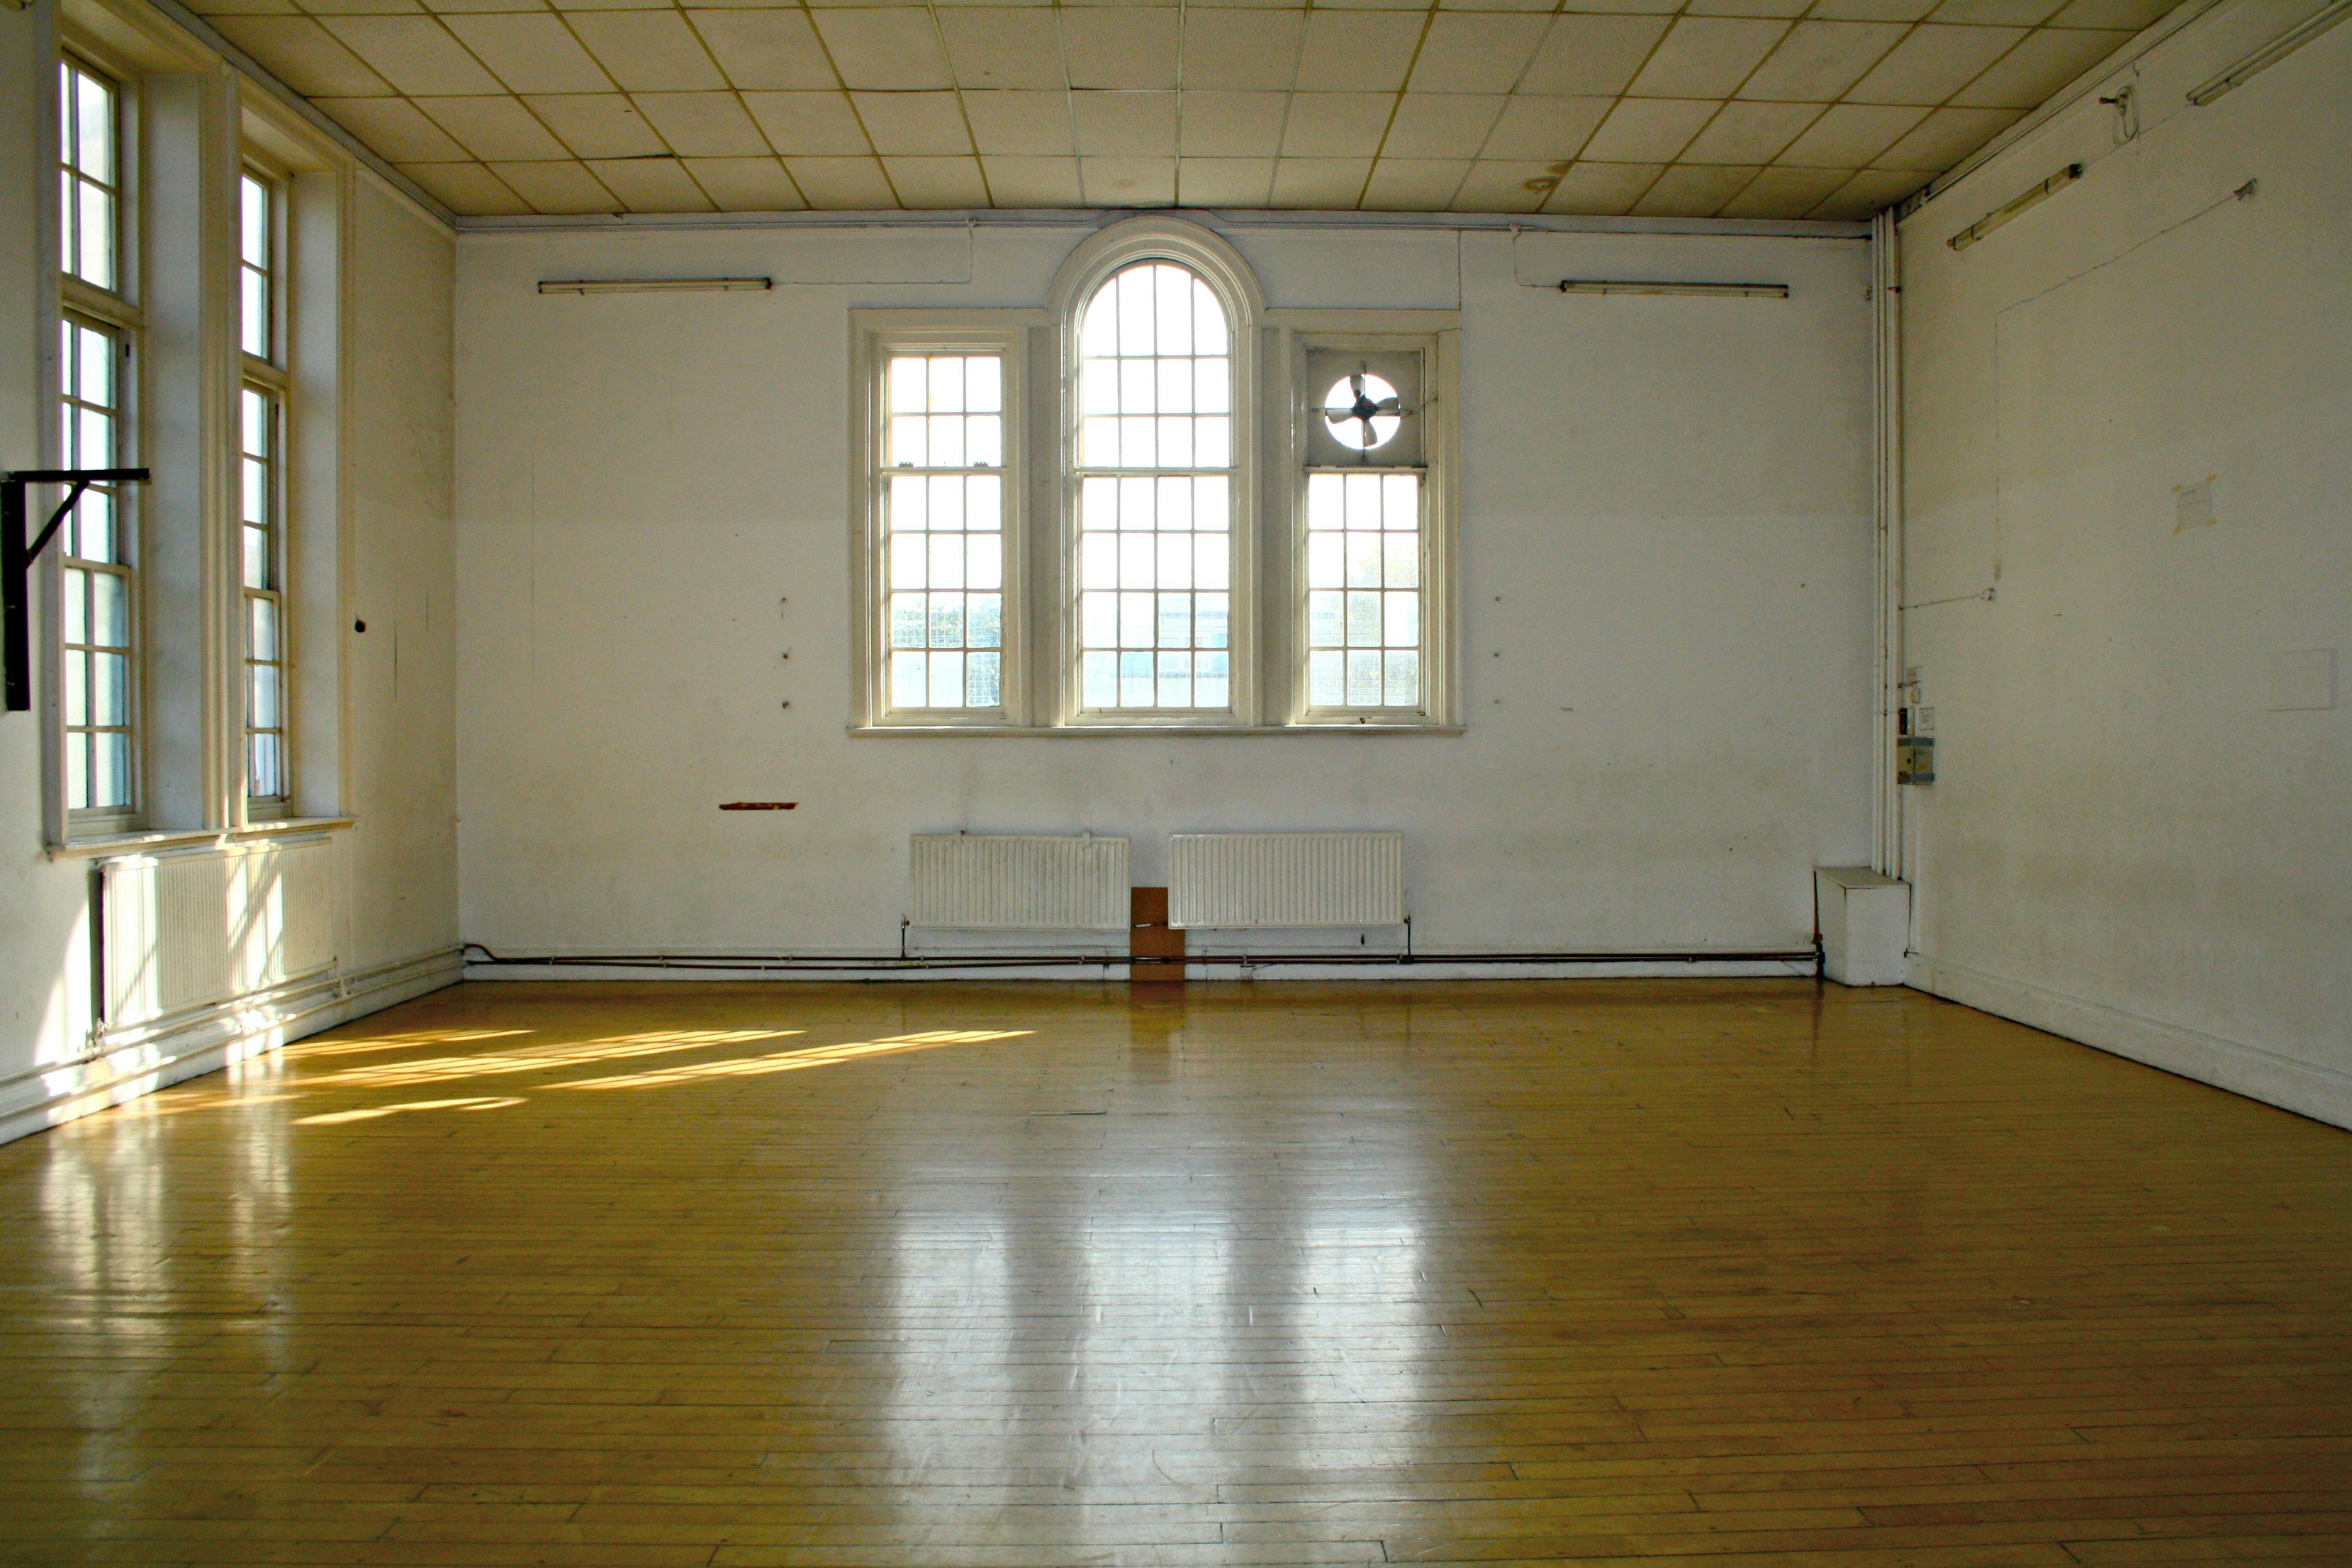 Dance Studio Venues in London - Eastbourne House Arts